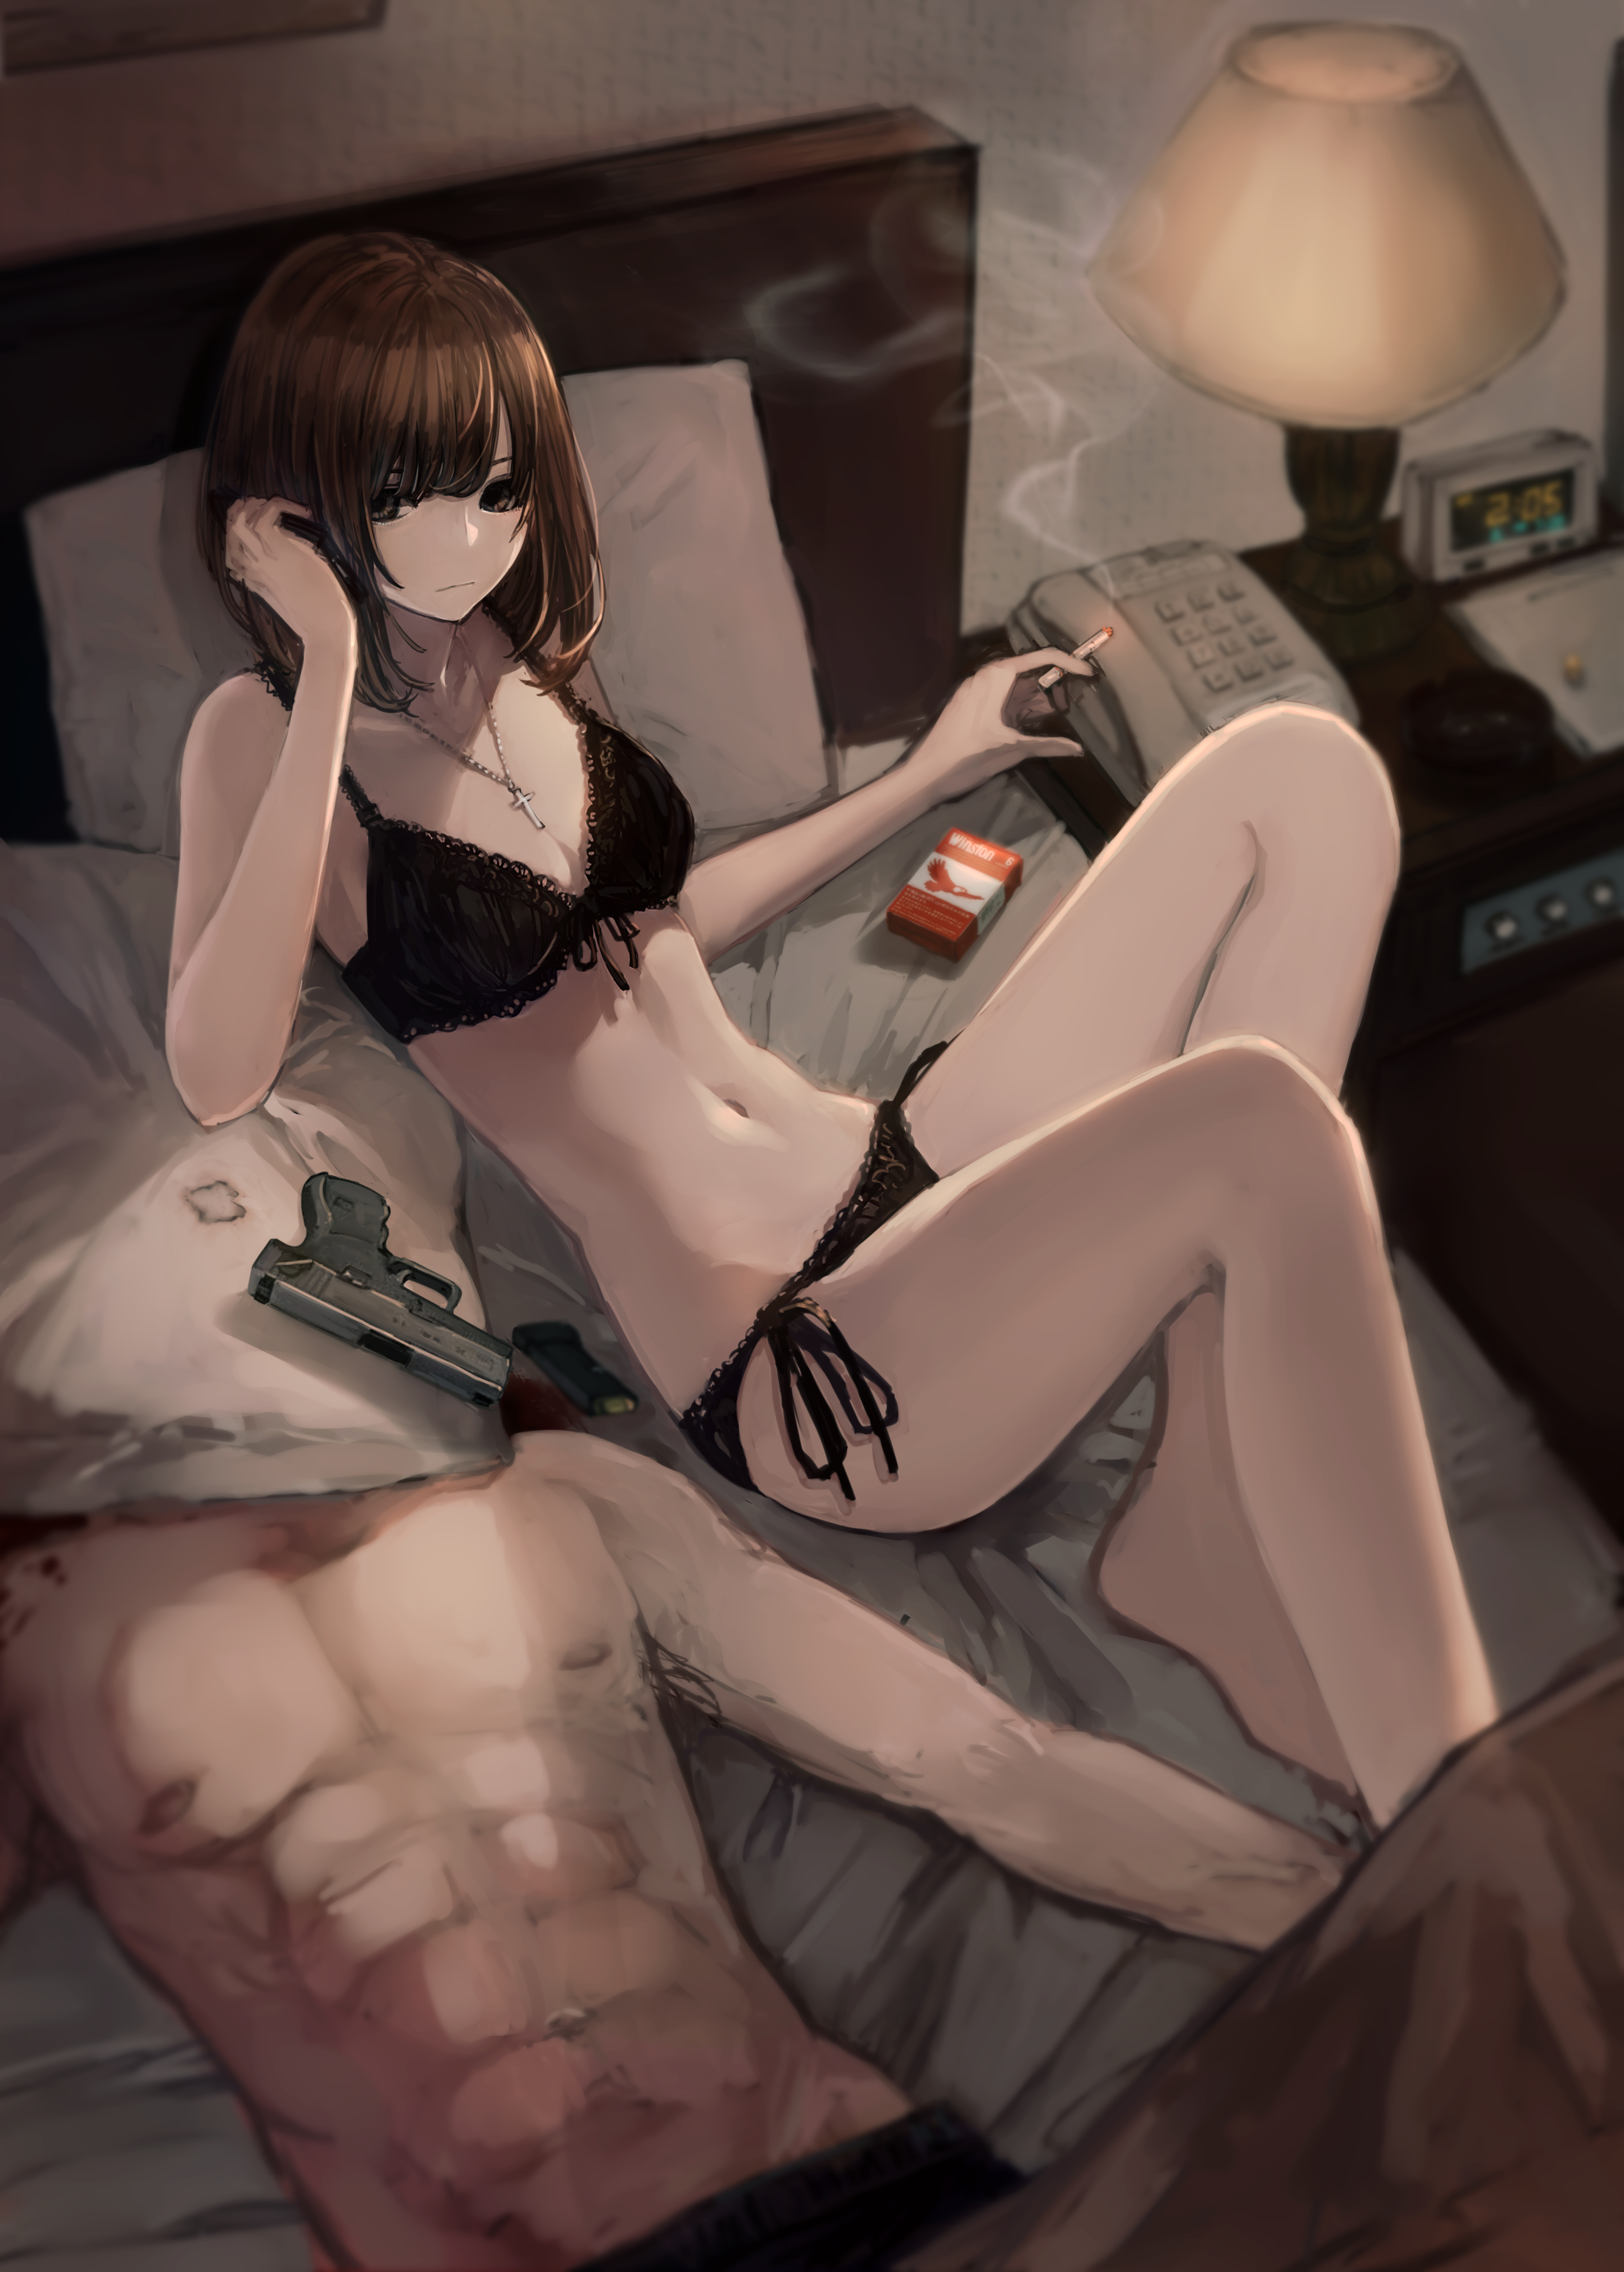 Anime 2591x3624 anime girls anime original characters Hashimoto Kokai high angle dead gun in bed women cigarettes bedroom murder